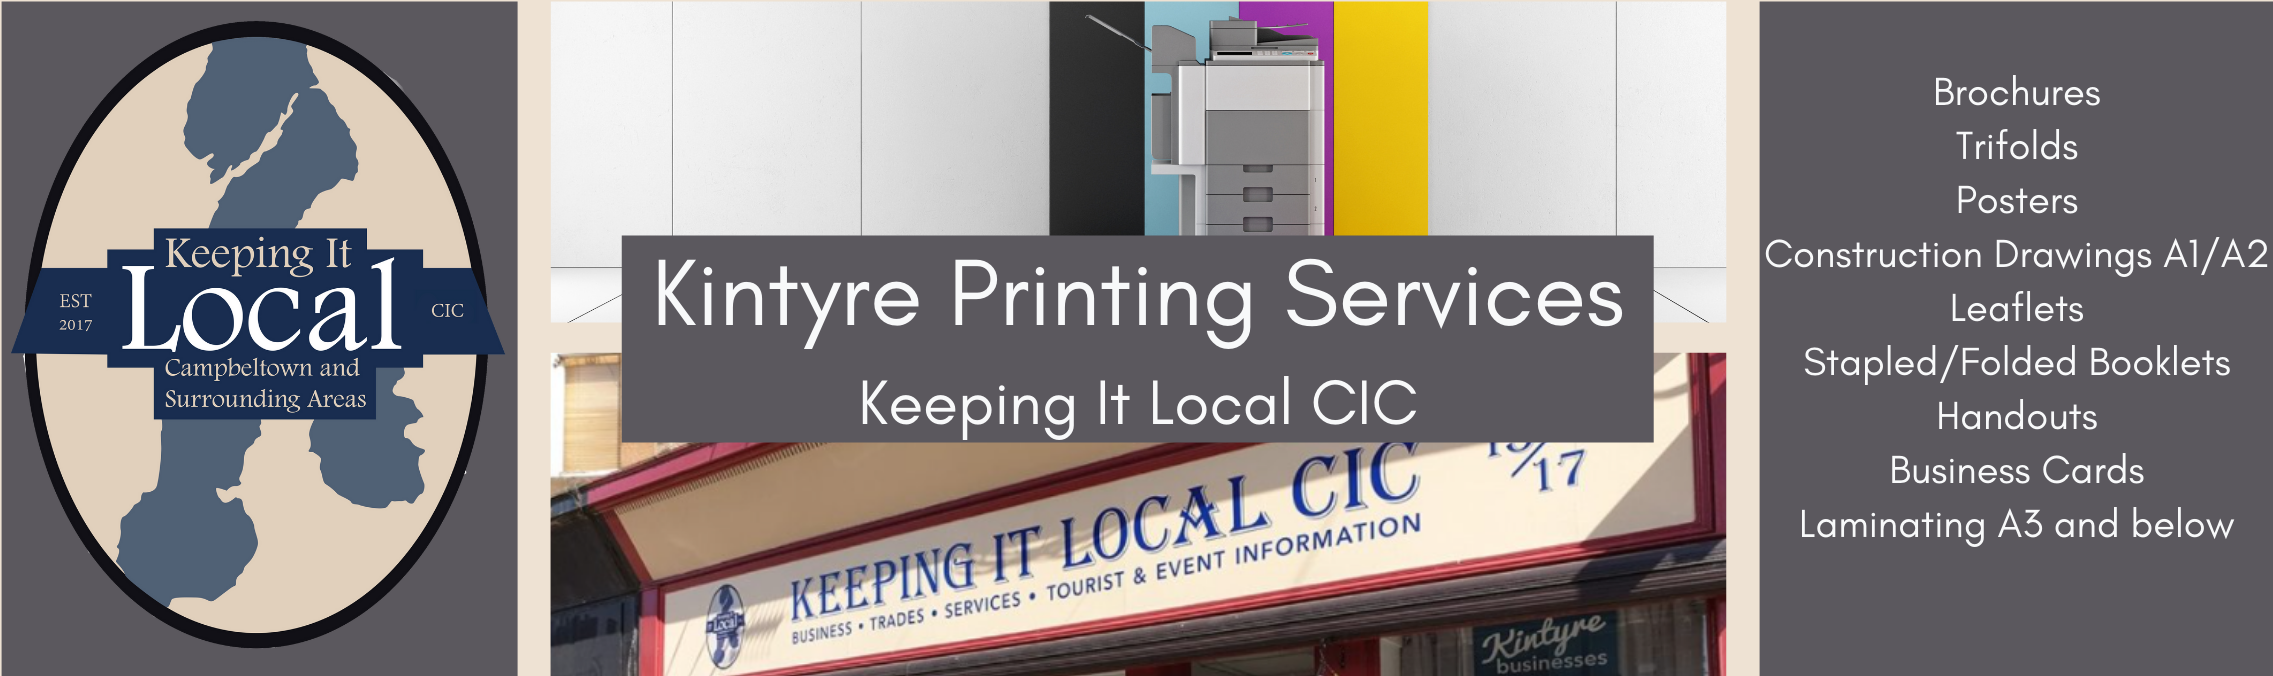 kintyre printing services header